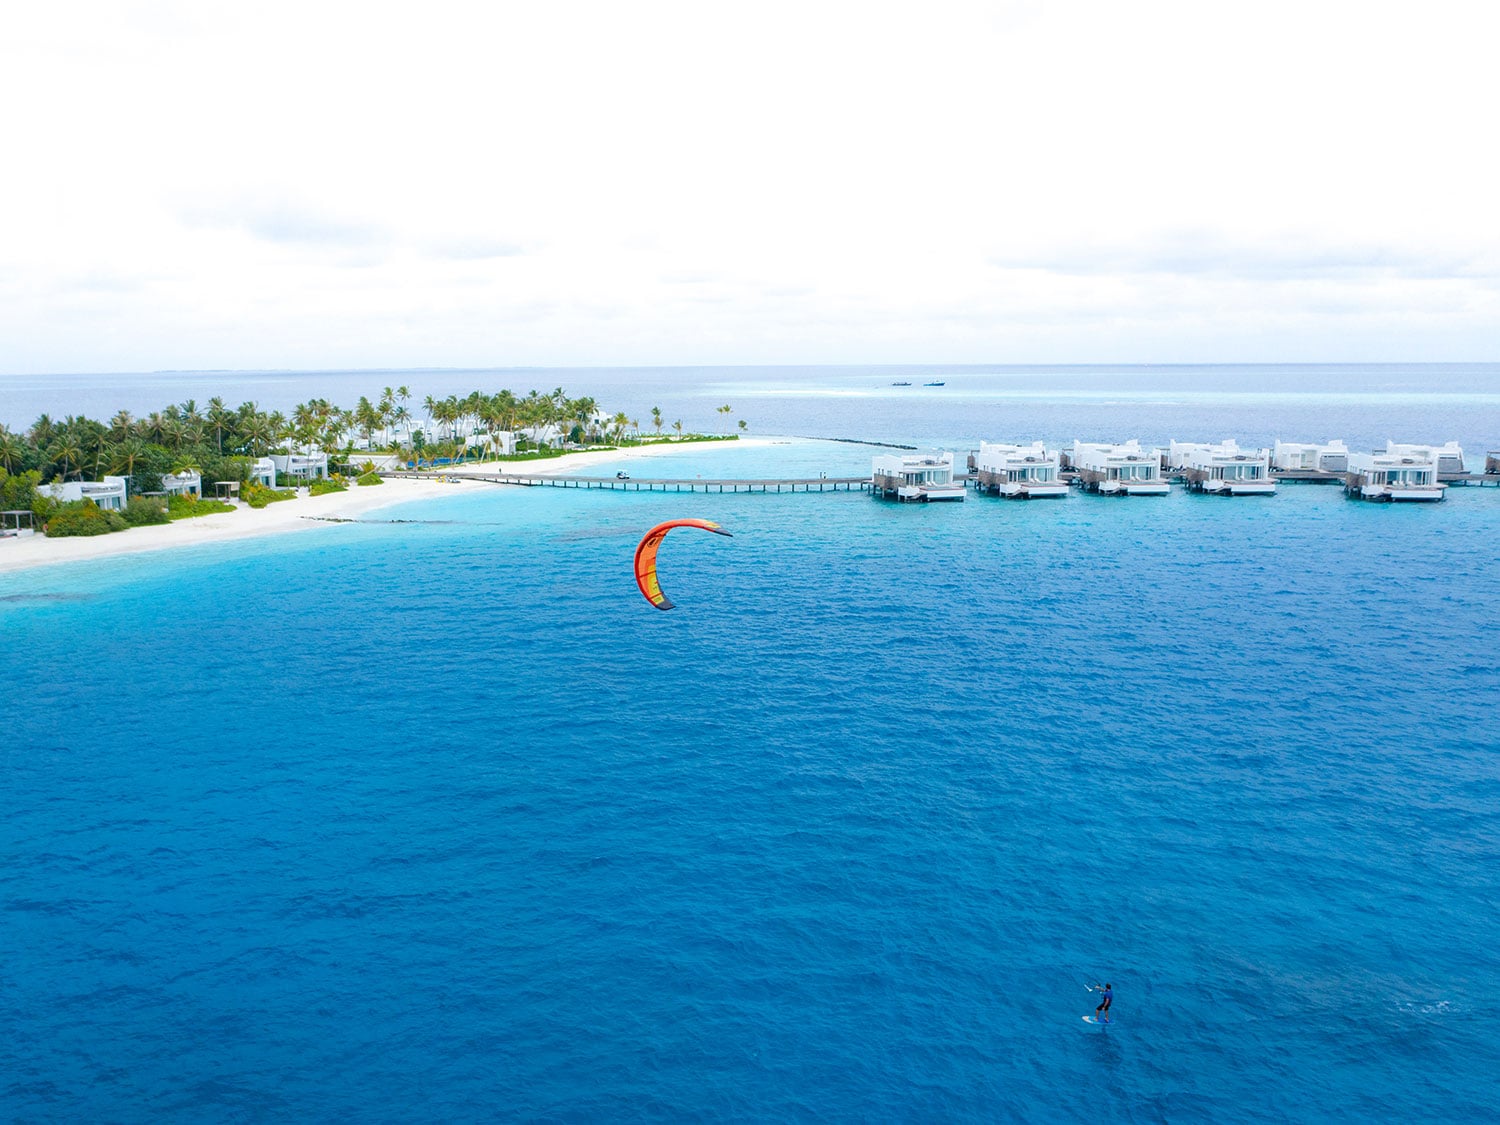 Kitesurfing in the Maldives